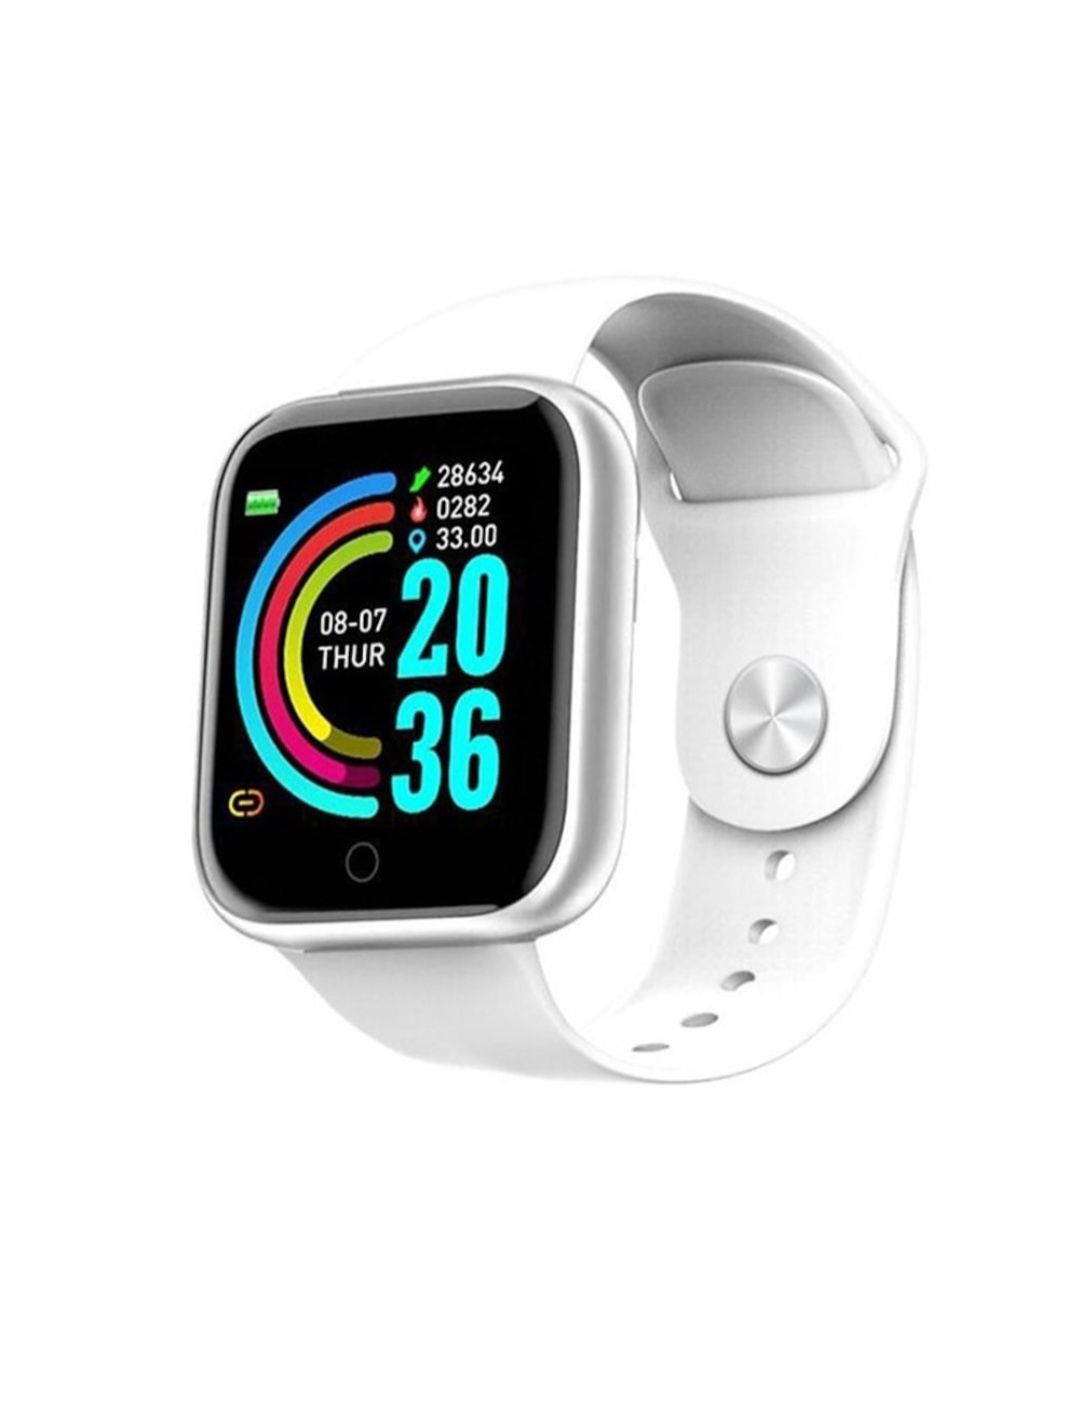 Smartwatch Alb performant. Vezi apeluri, mesaje, notificări. Bluetooth